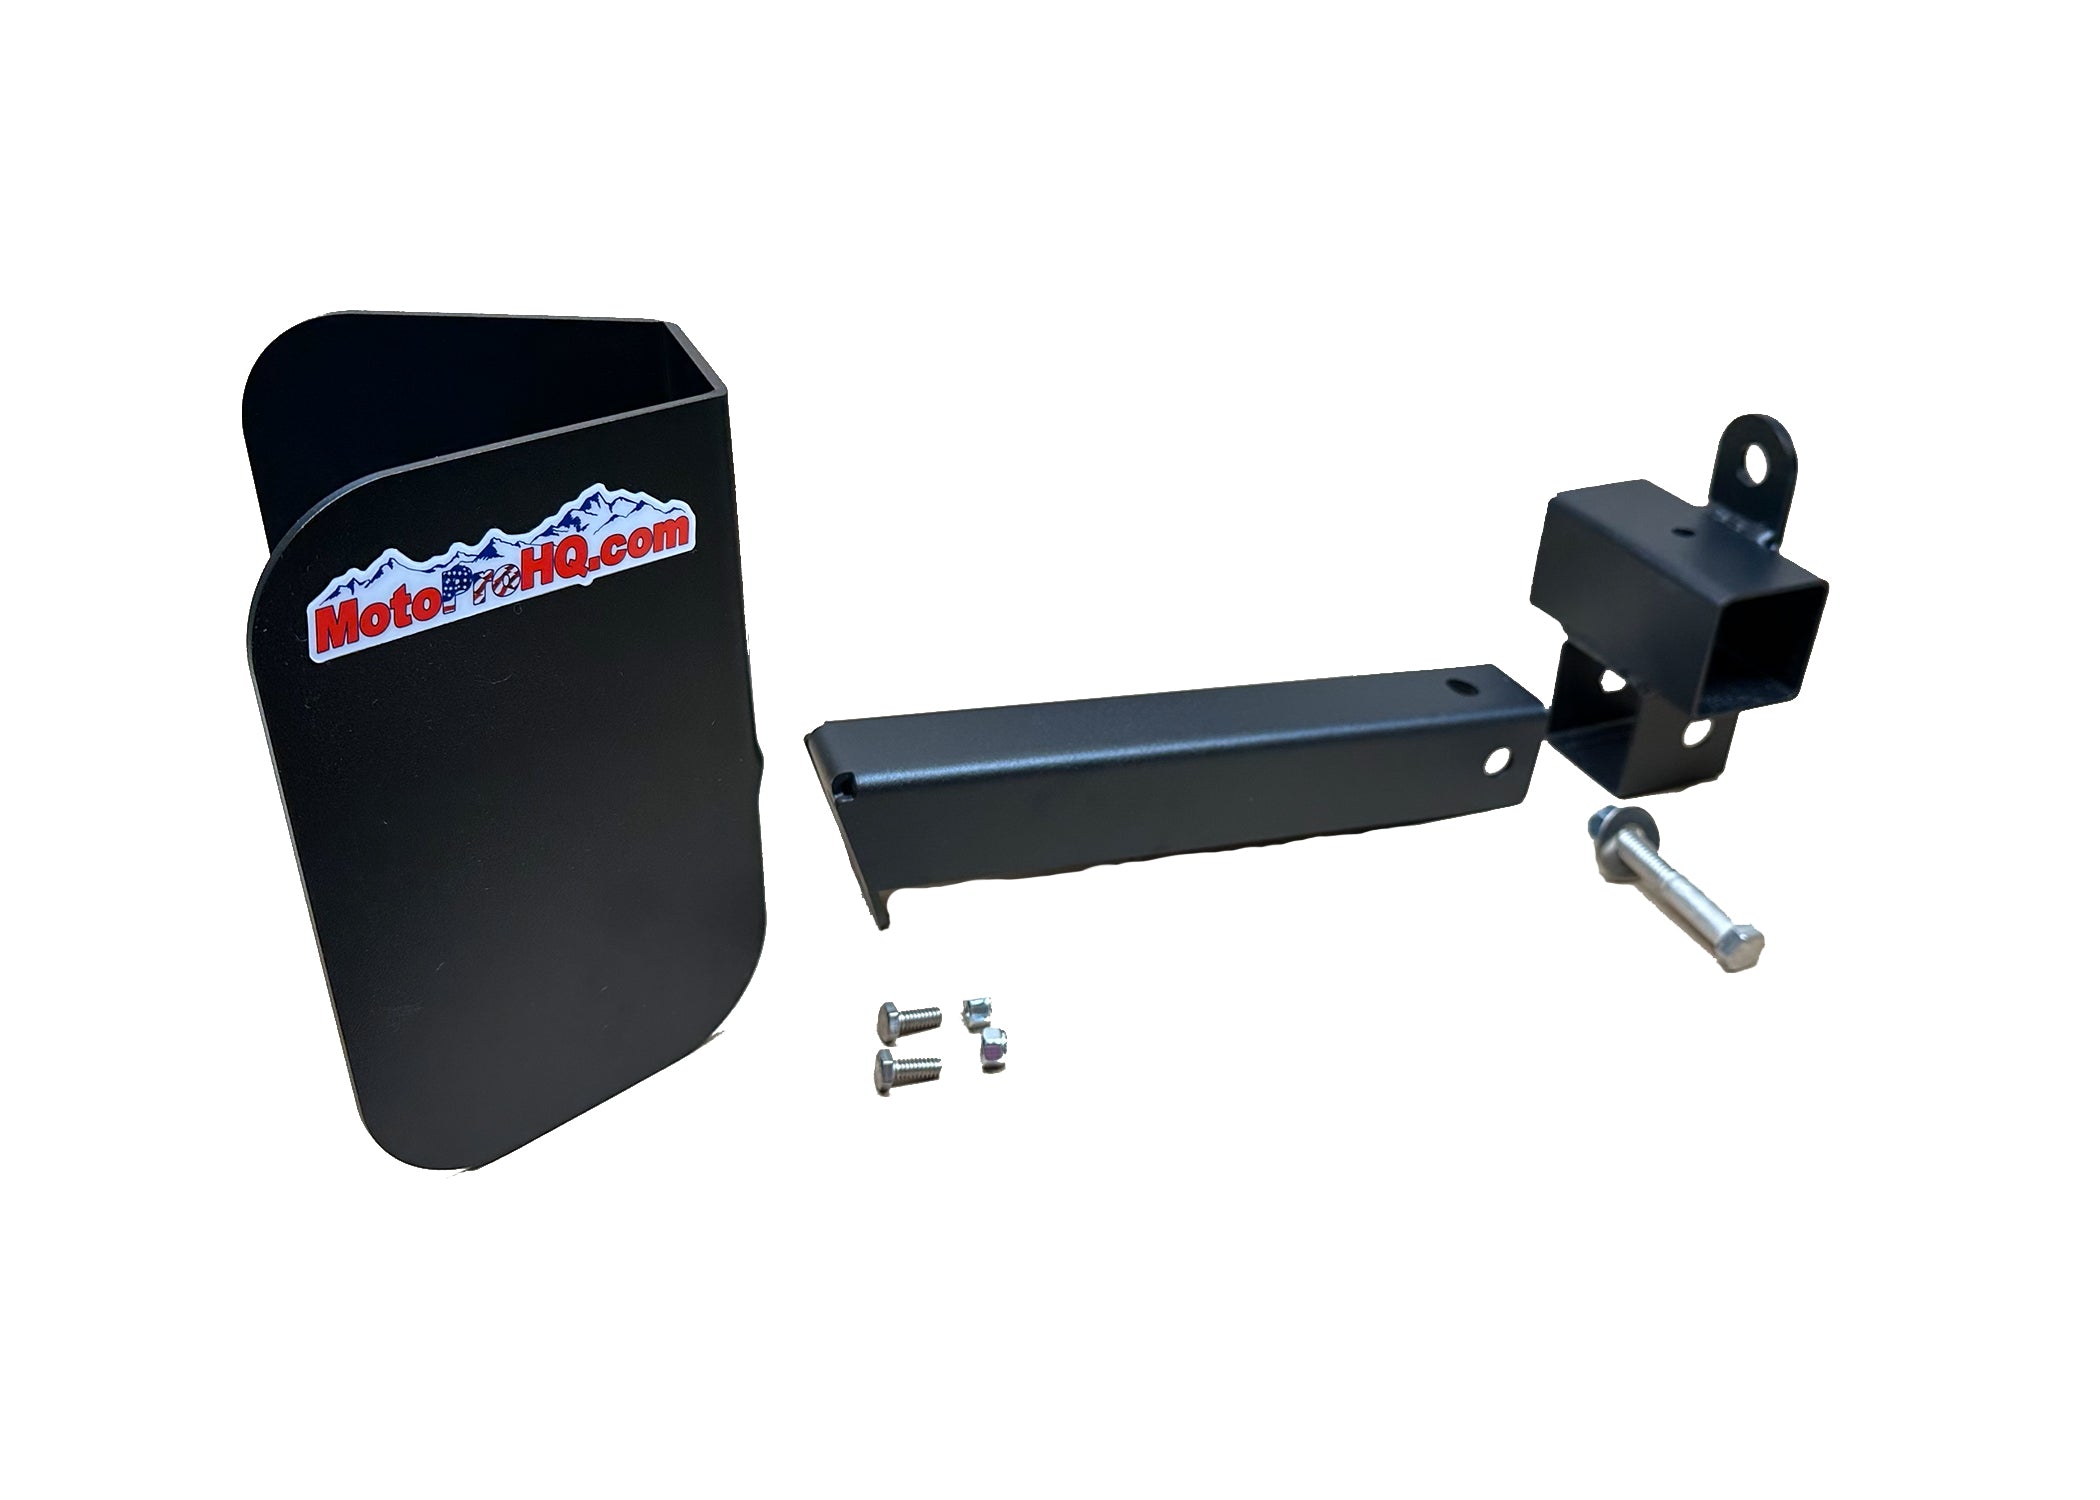 NiceRack Motorcycle Truck Rack | Clamp System